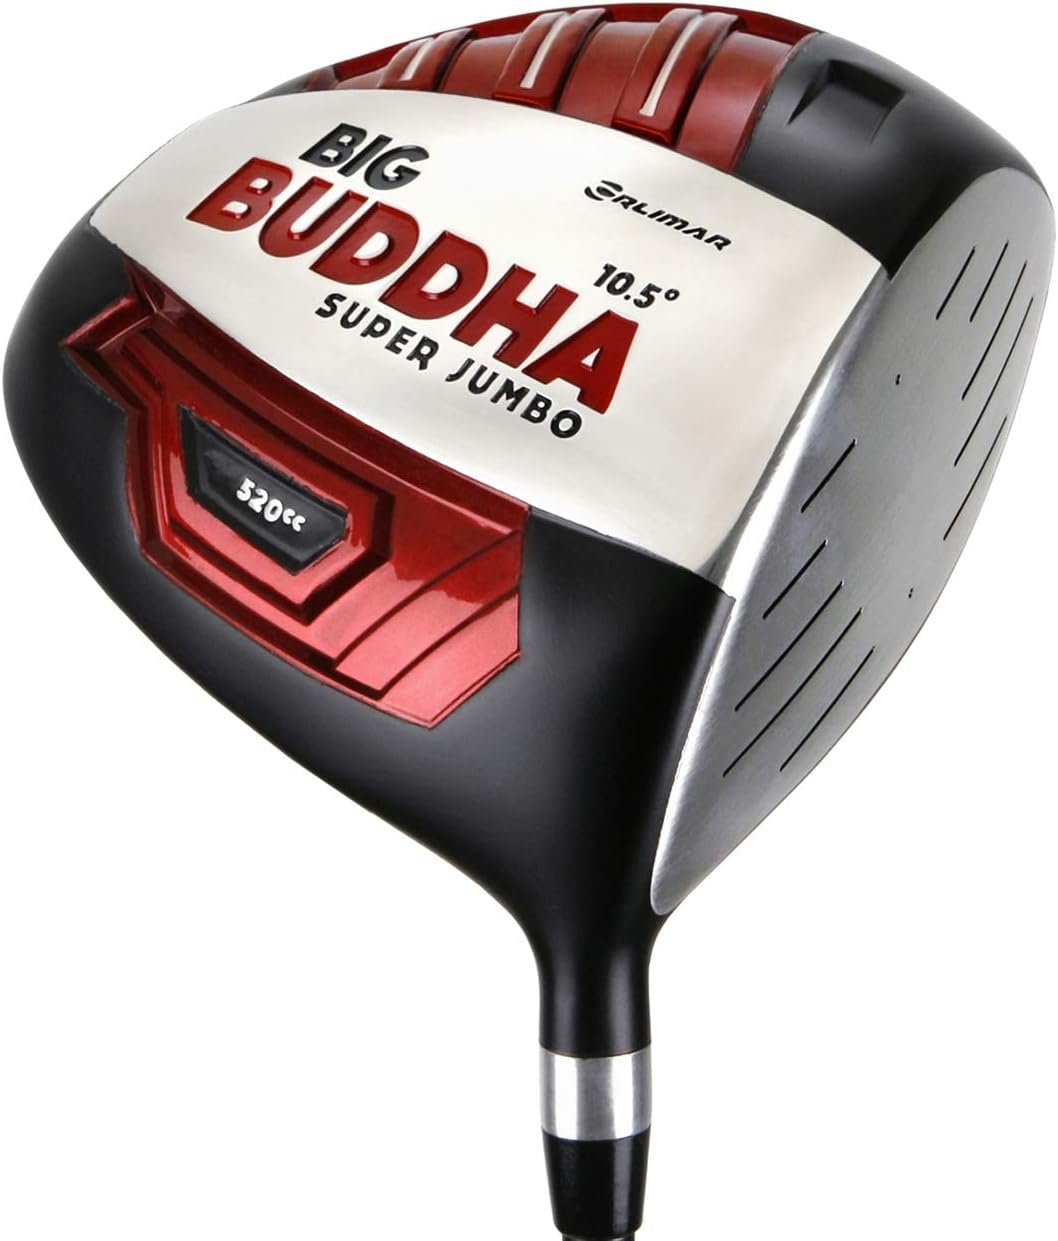 Orlimar Golf Black Big Buddha 520cc Super Jumbo Driver New